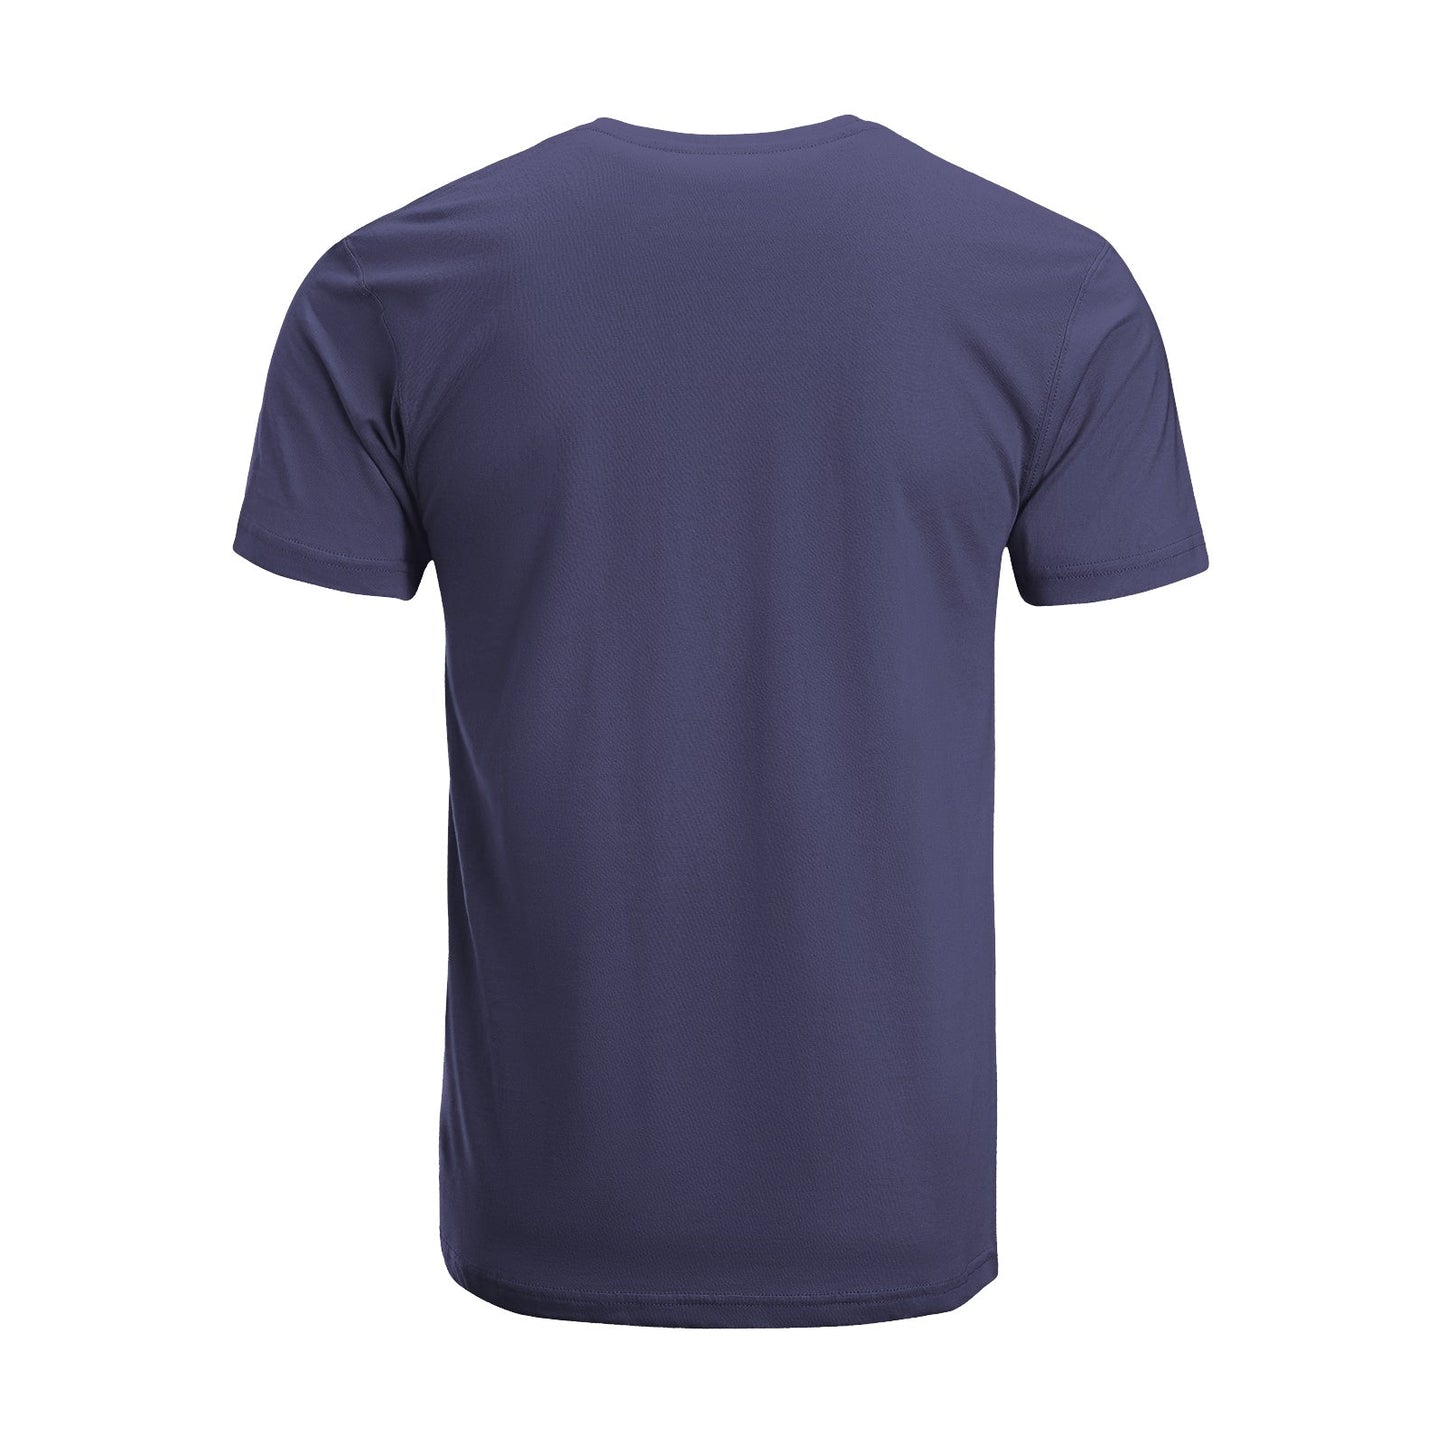 Unisex Short Sleeve Crew Neck Cotton Jersey T-Shirt USA 17